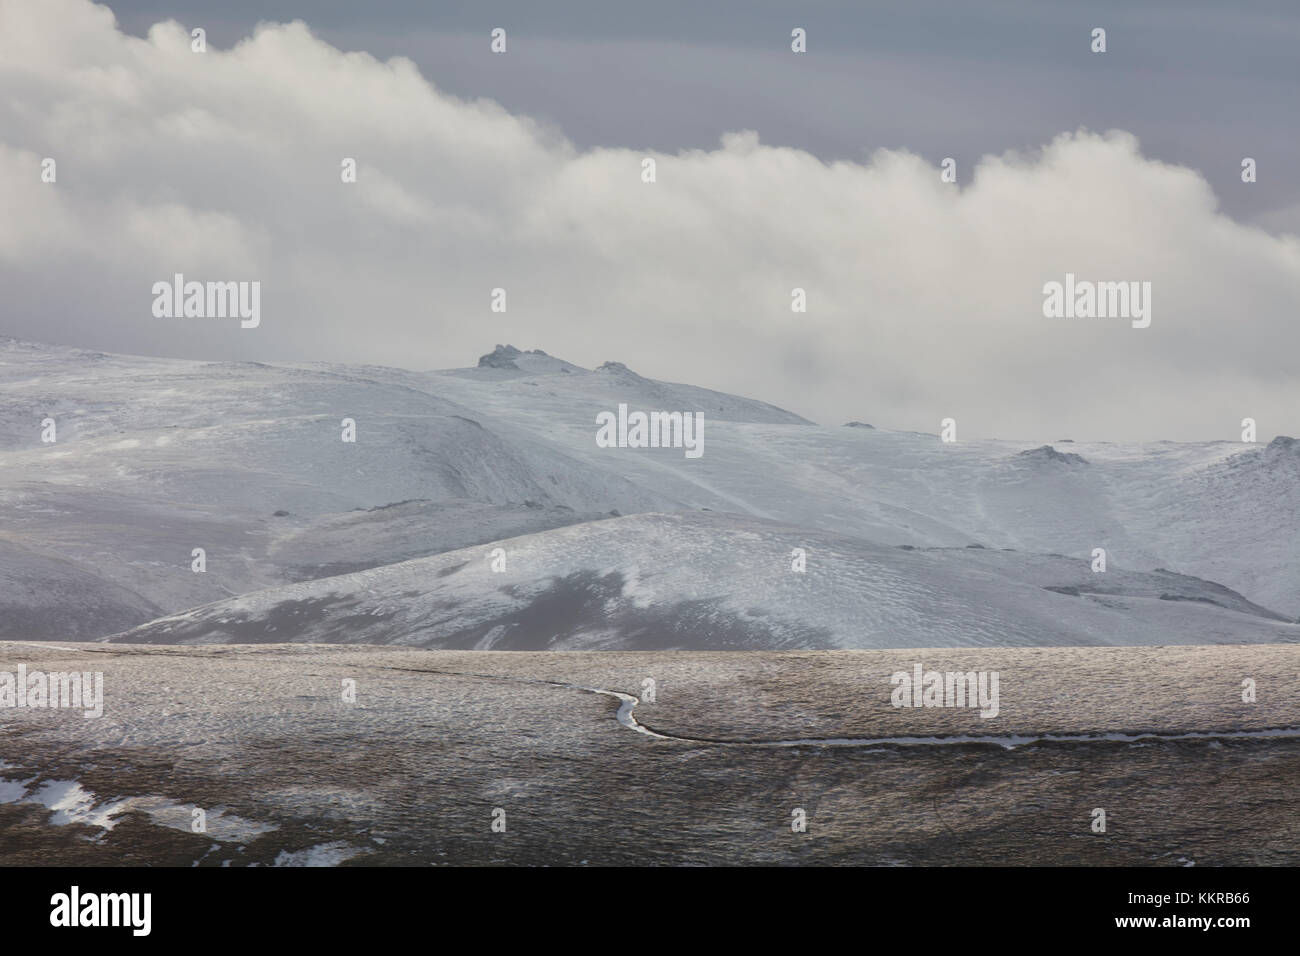 Landscape of scotland mountain range in highlands Stock Photo